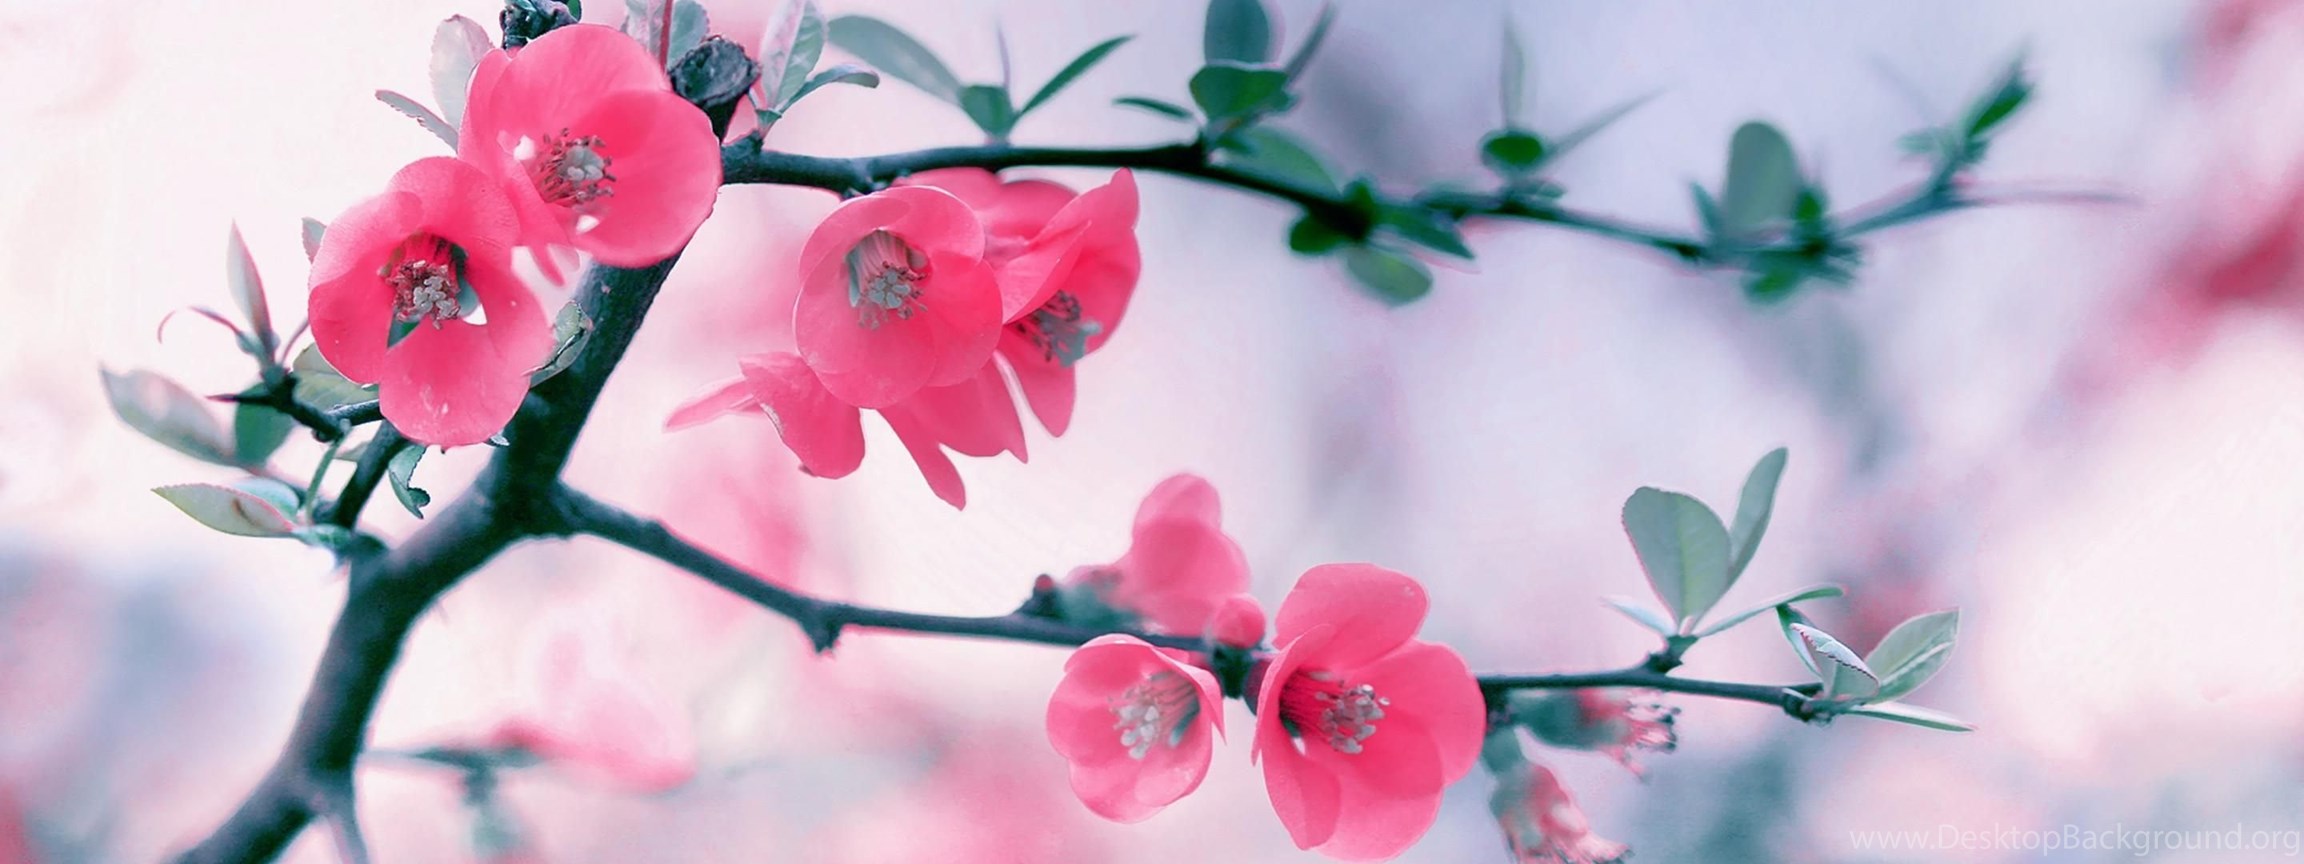 Download Spring Flowers Wallpapers For Desktop 14 Hd Wallpapers Planezen Co...